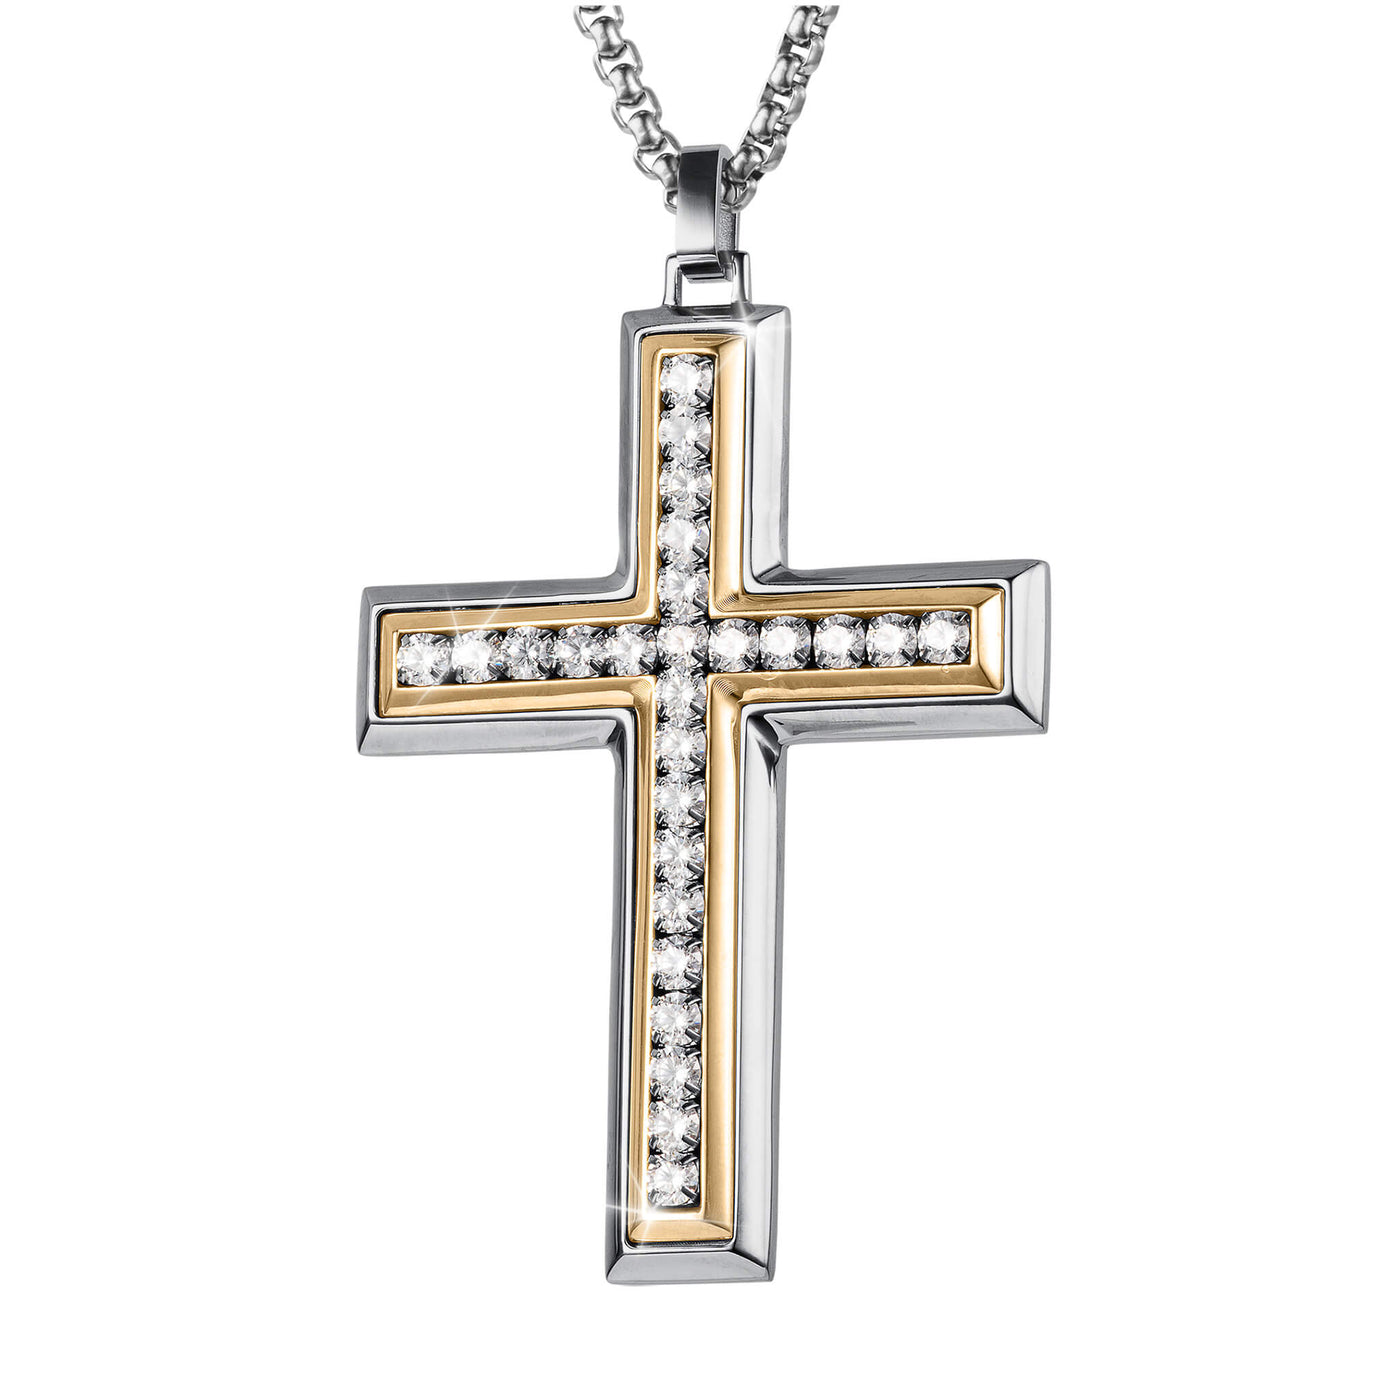 Daniel Steiger Majestic Trinity Cross Pendant